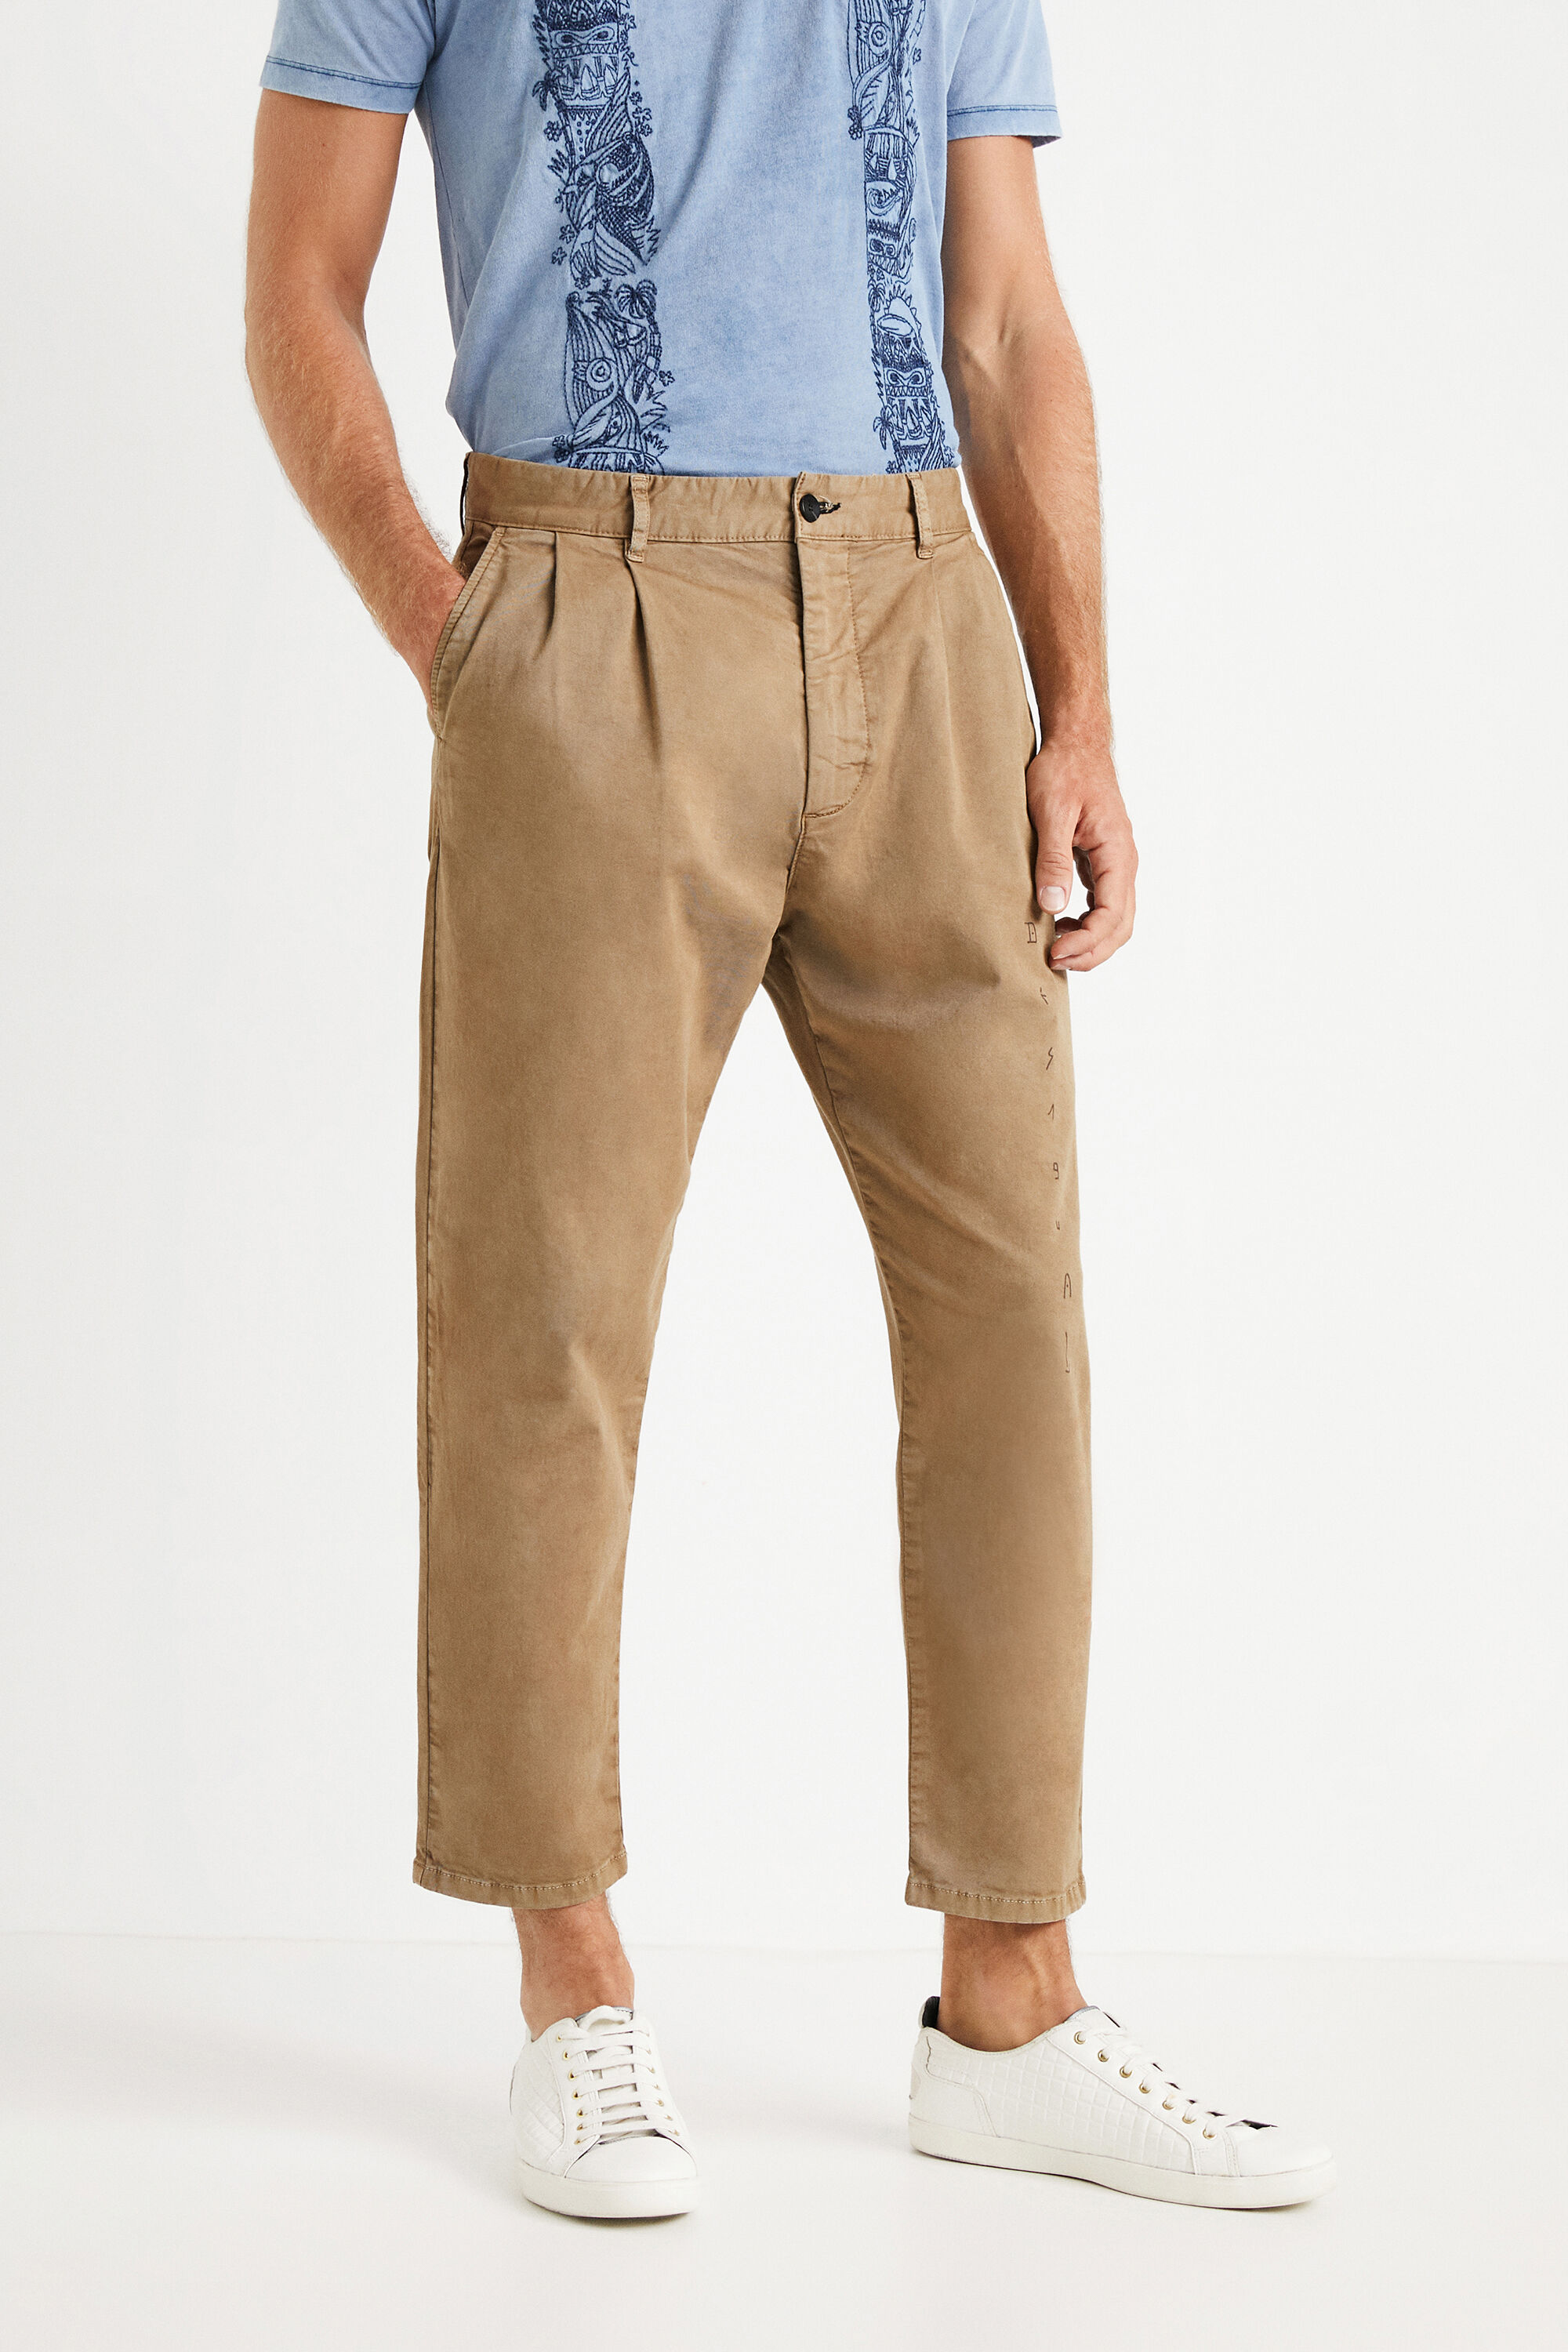 Men's pants and jeans | Desigual